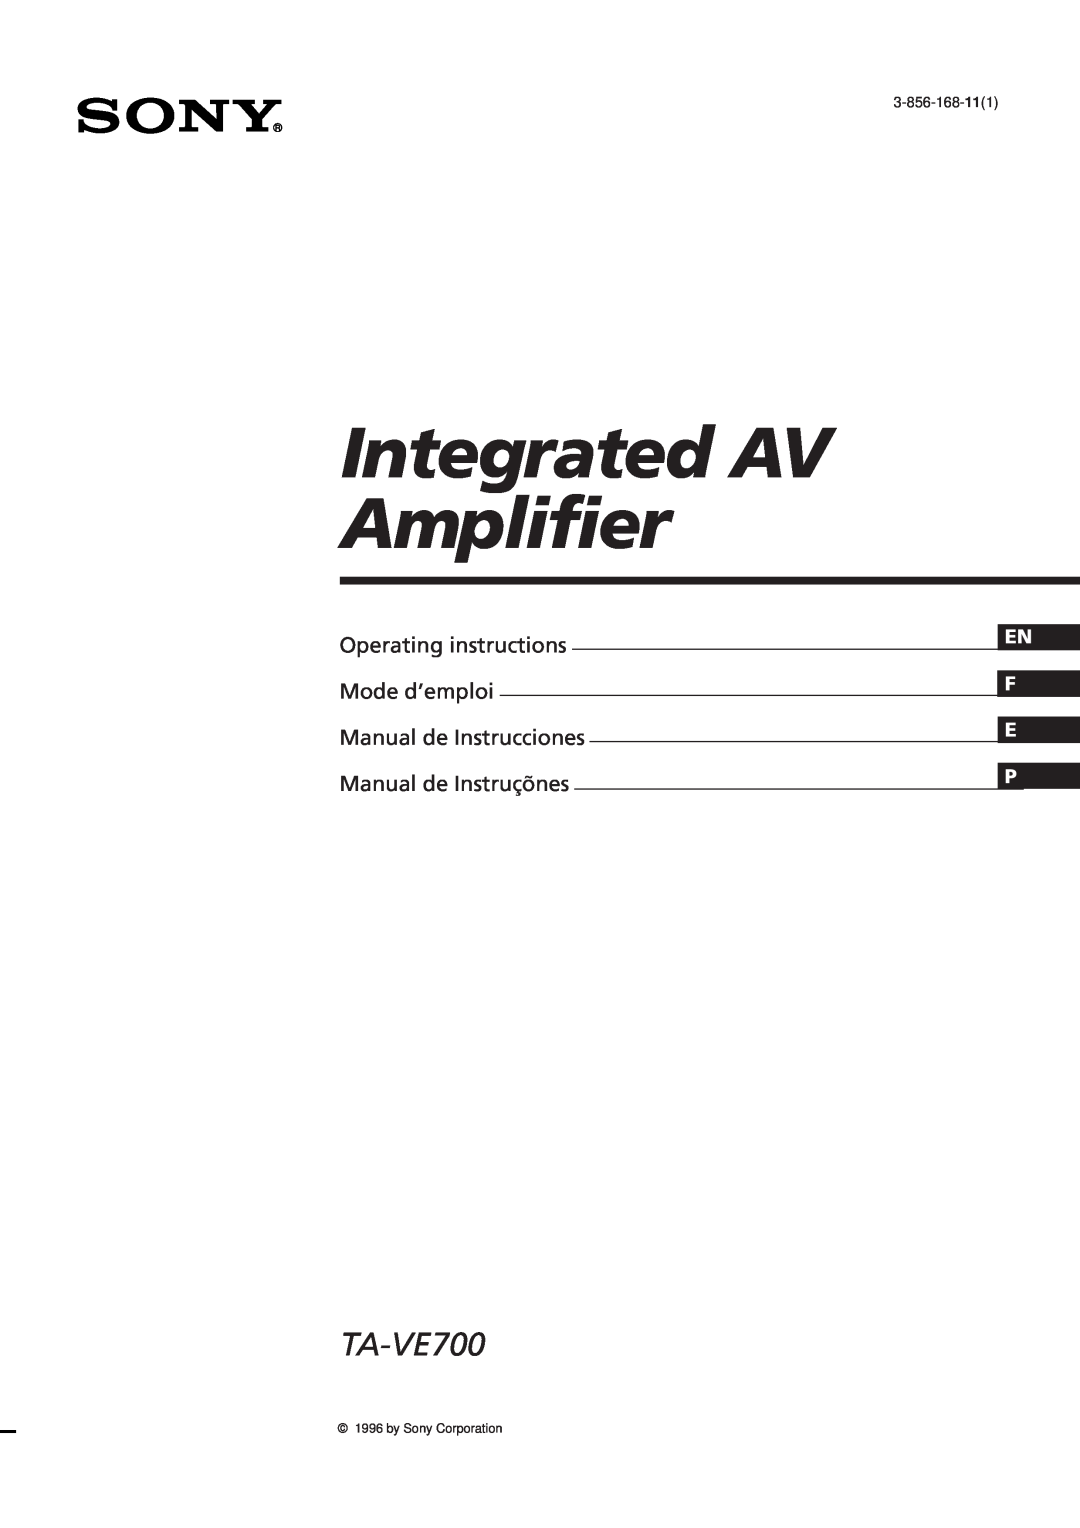 Sony TA-VE700 manual Integrated AV Amplifier, Operating instructions, Mode d’emploi, Manual de Instrucciones 